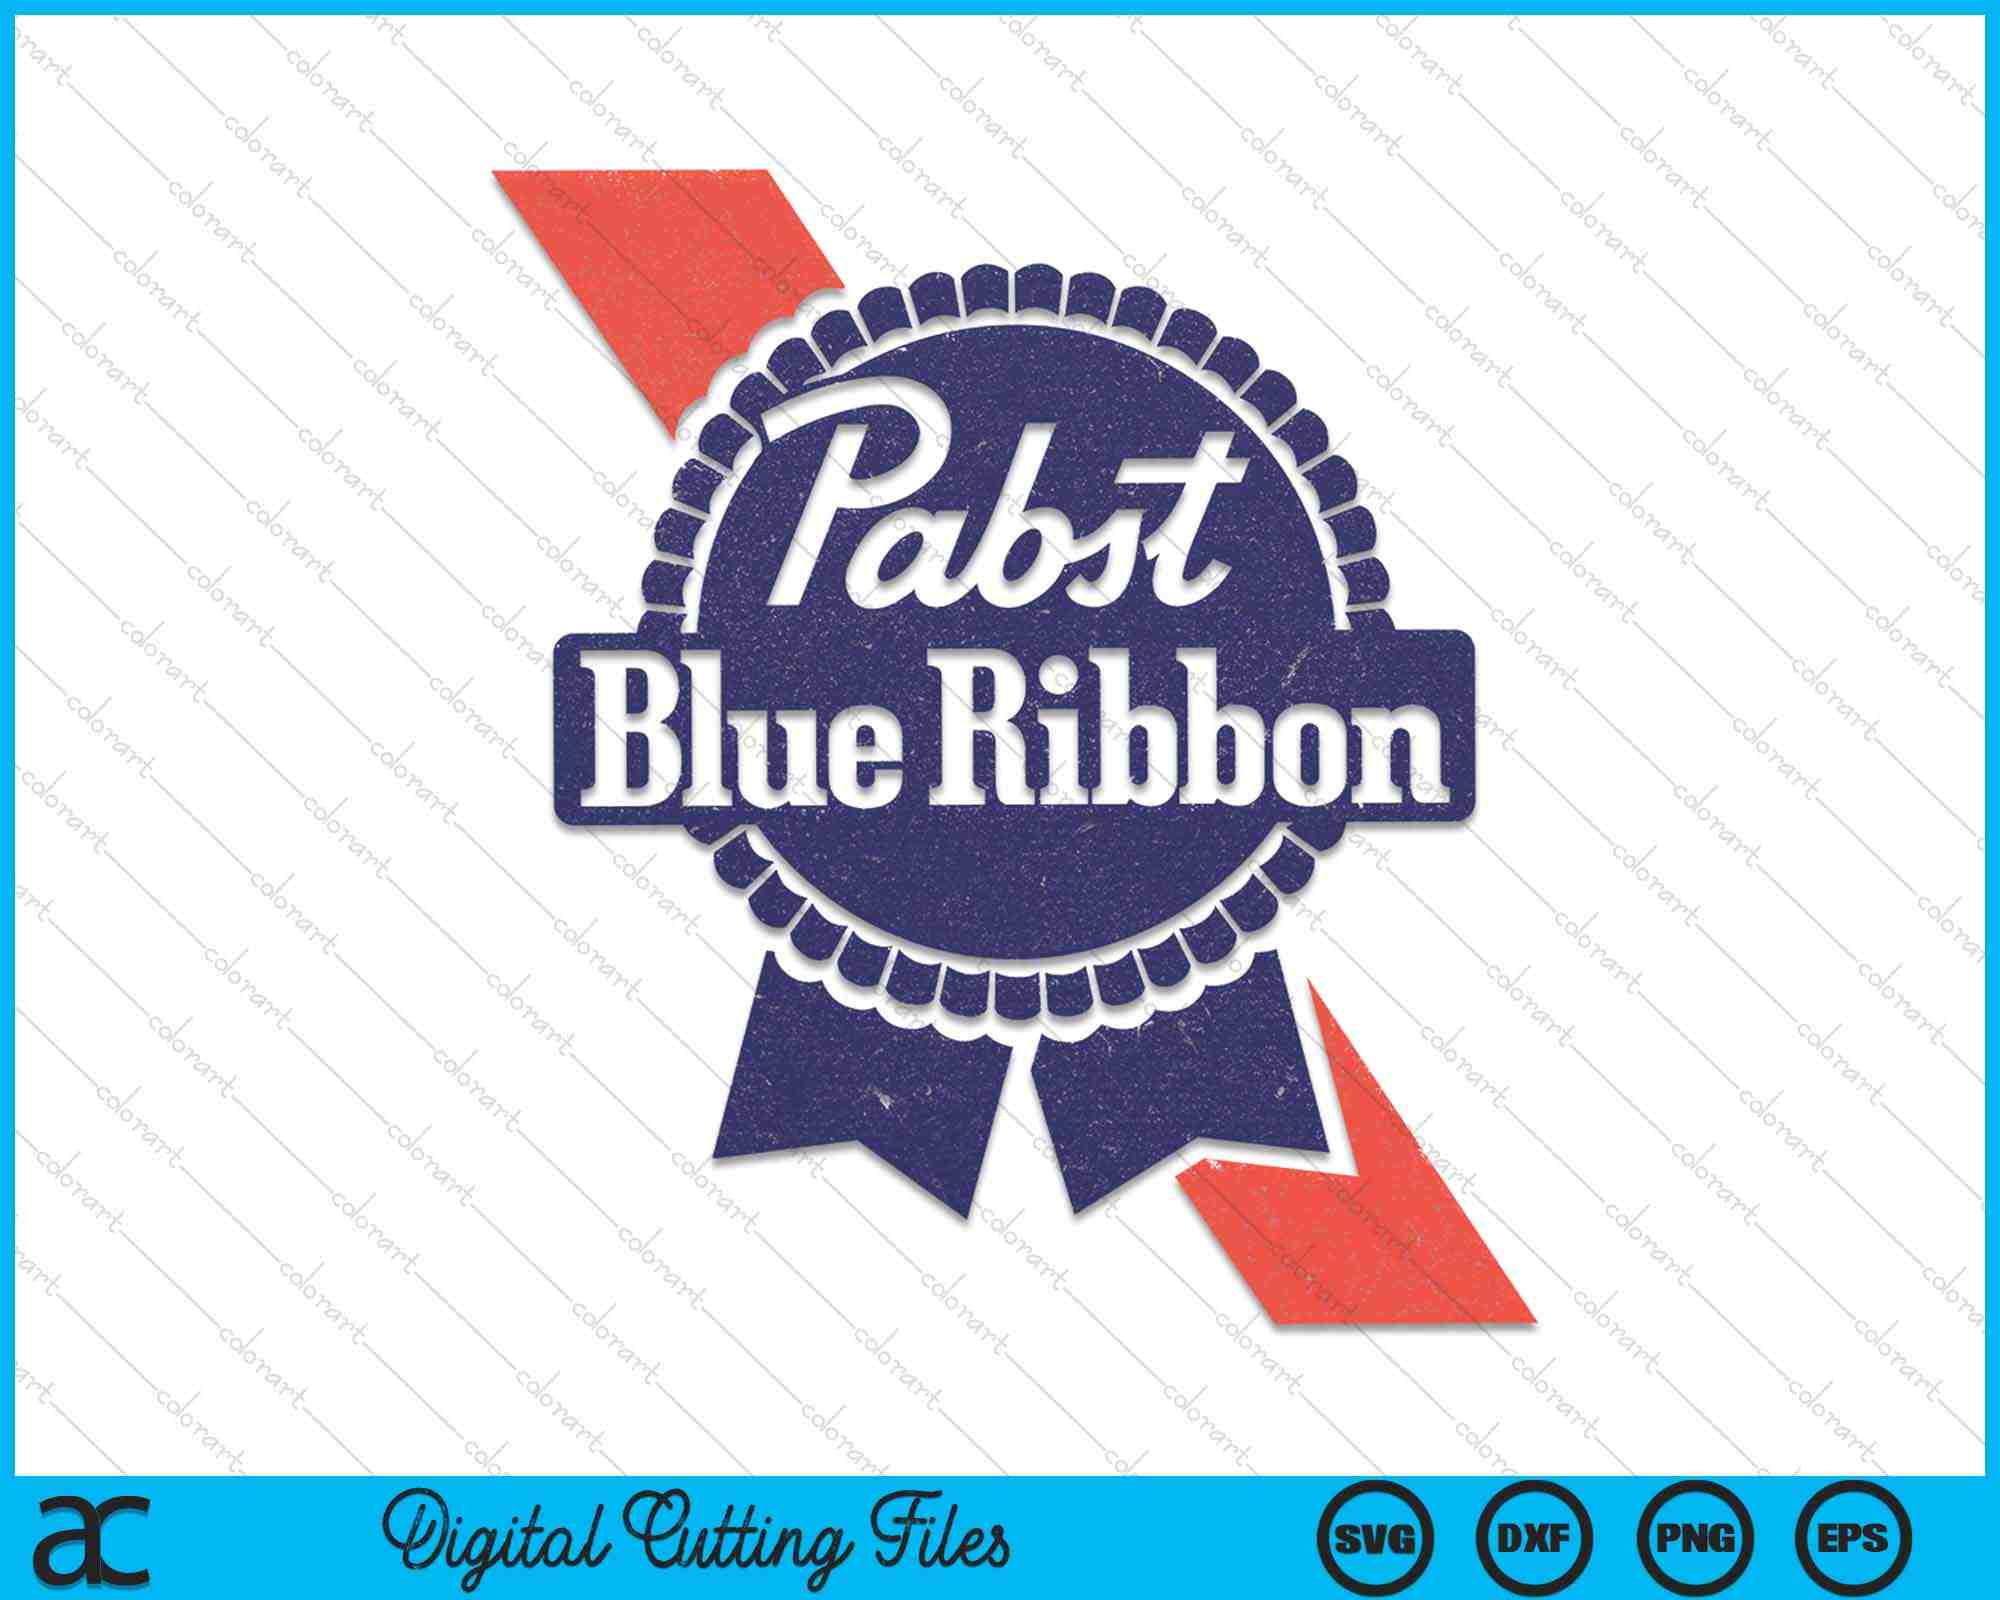 Personalized Pabst Blue Ribbon Hockey Jersey